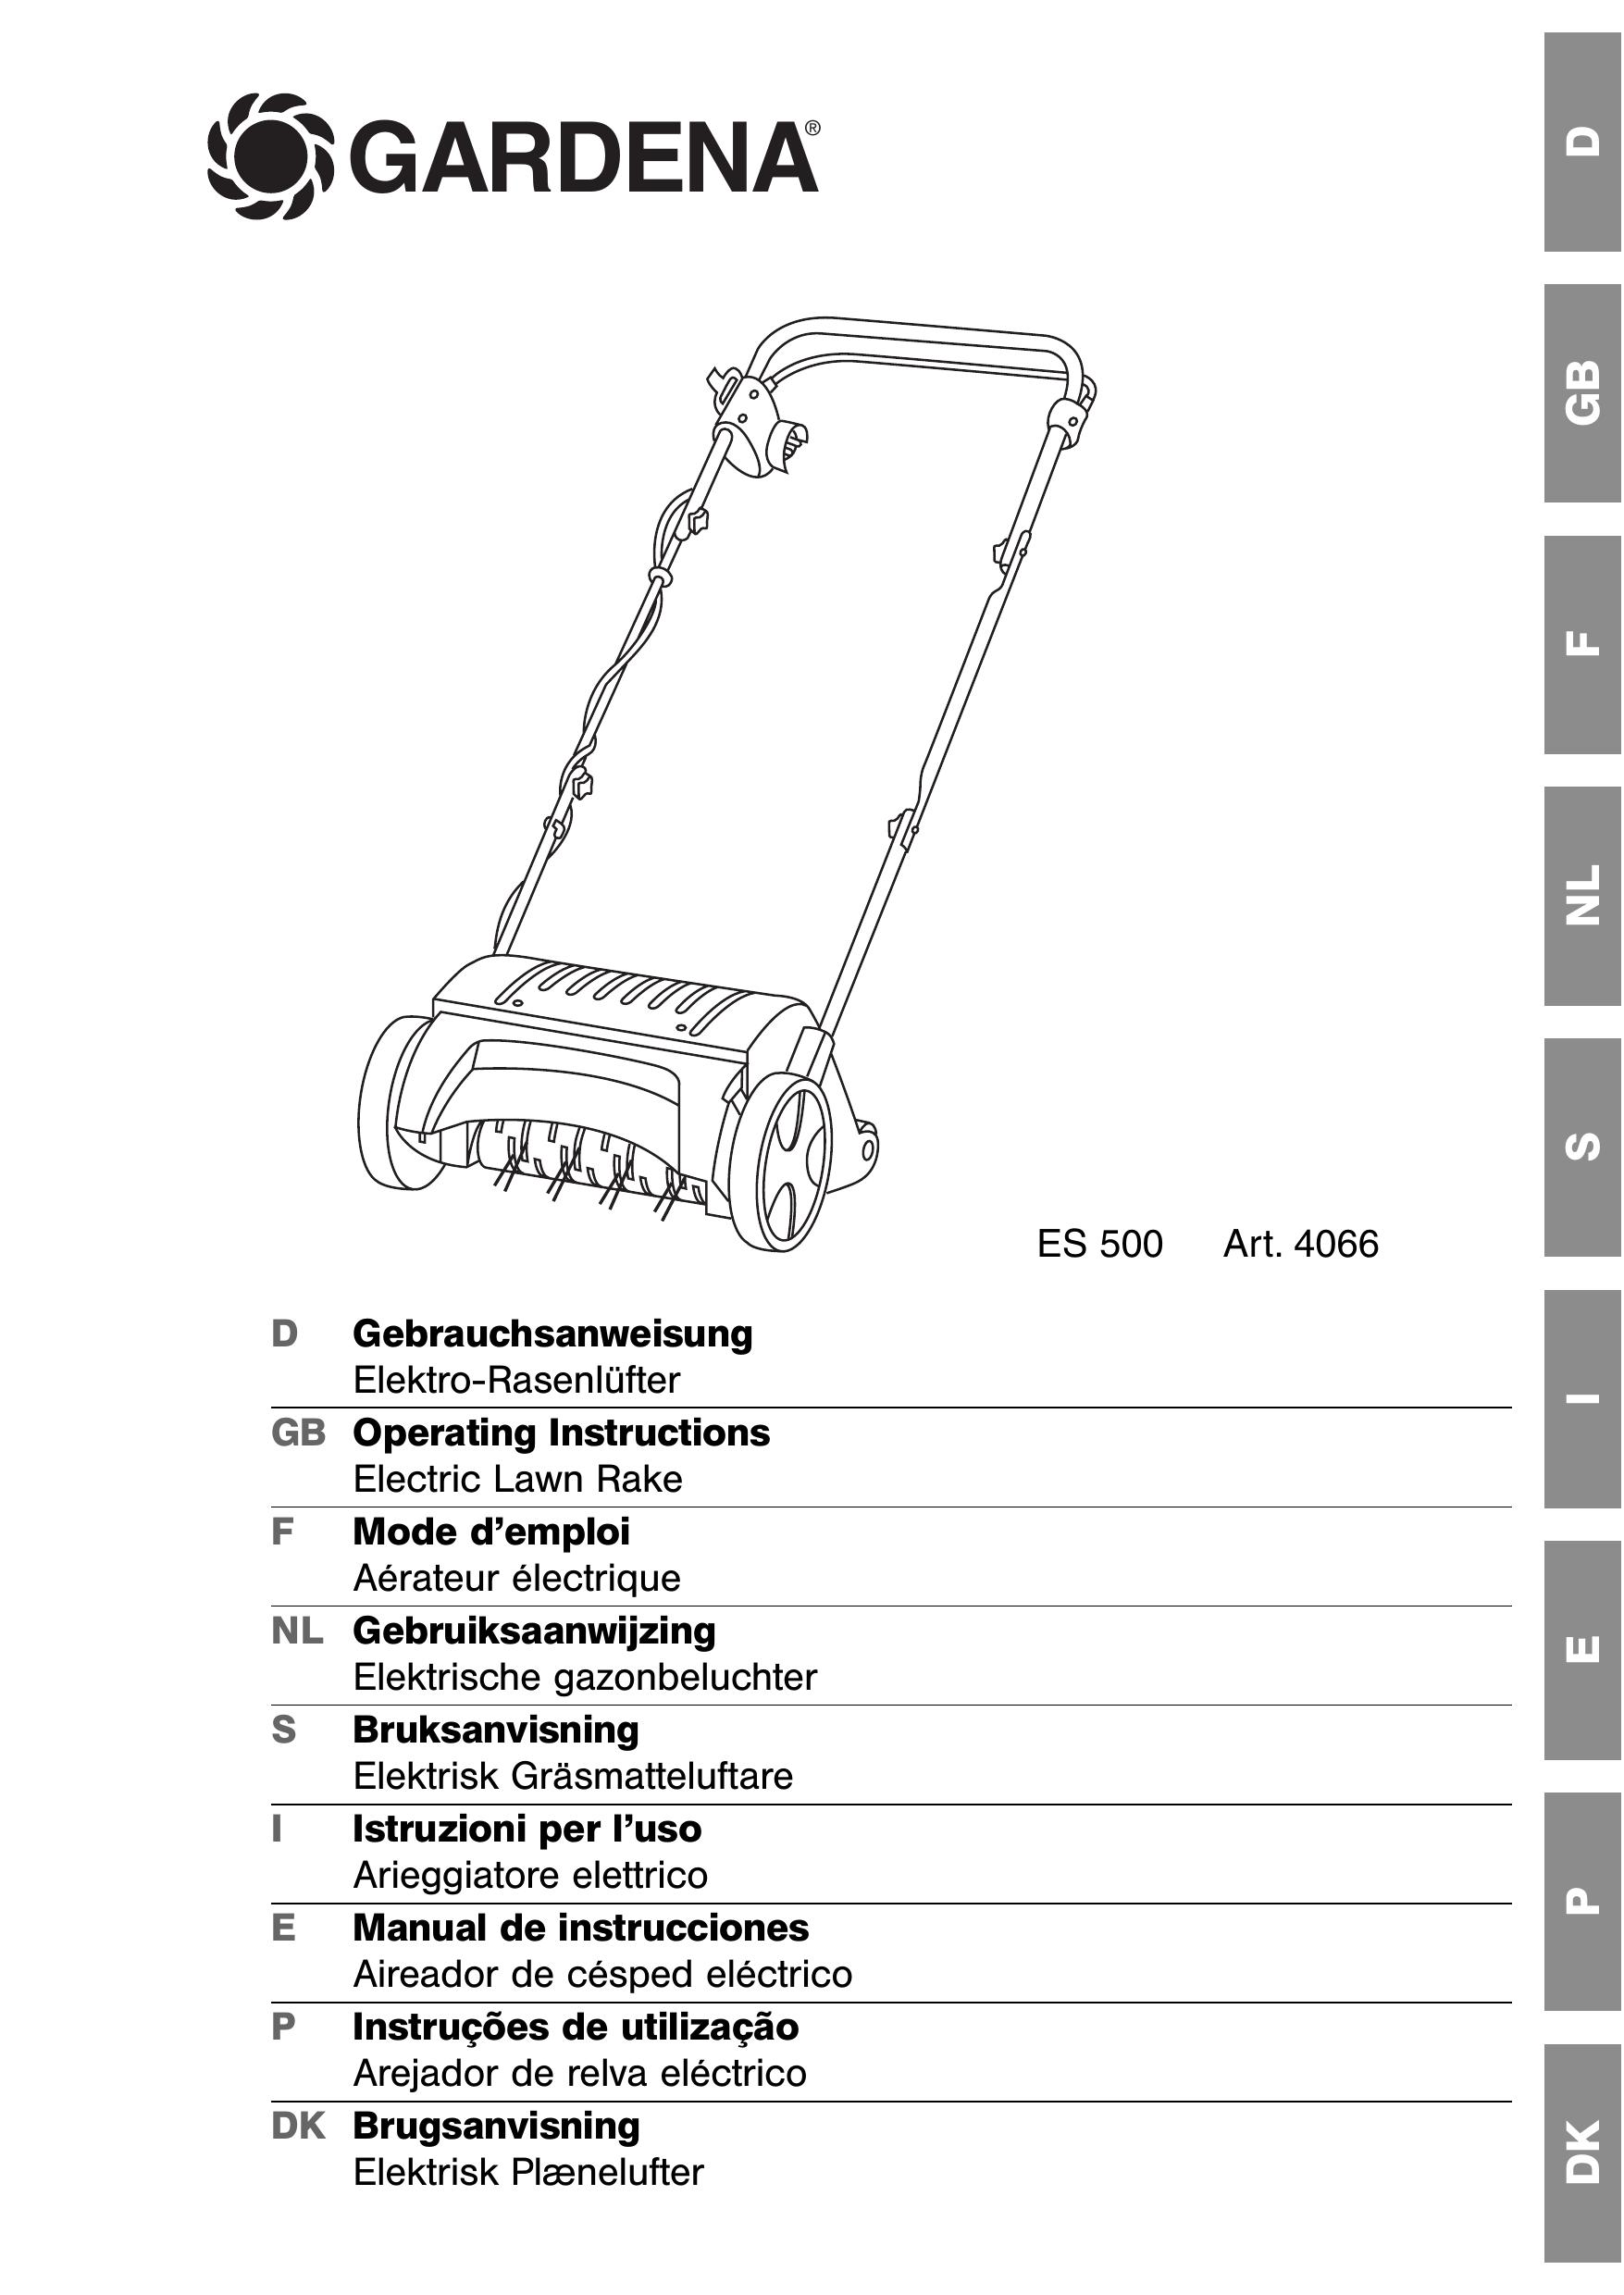 Gardena ES 500 Lawn Mower User Manual